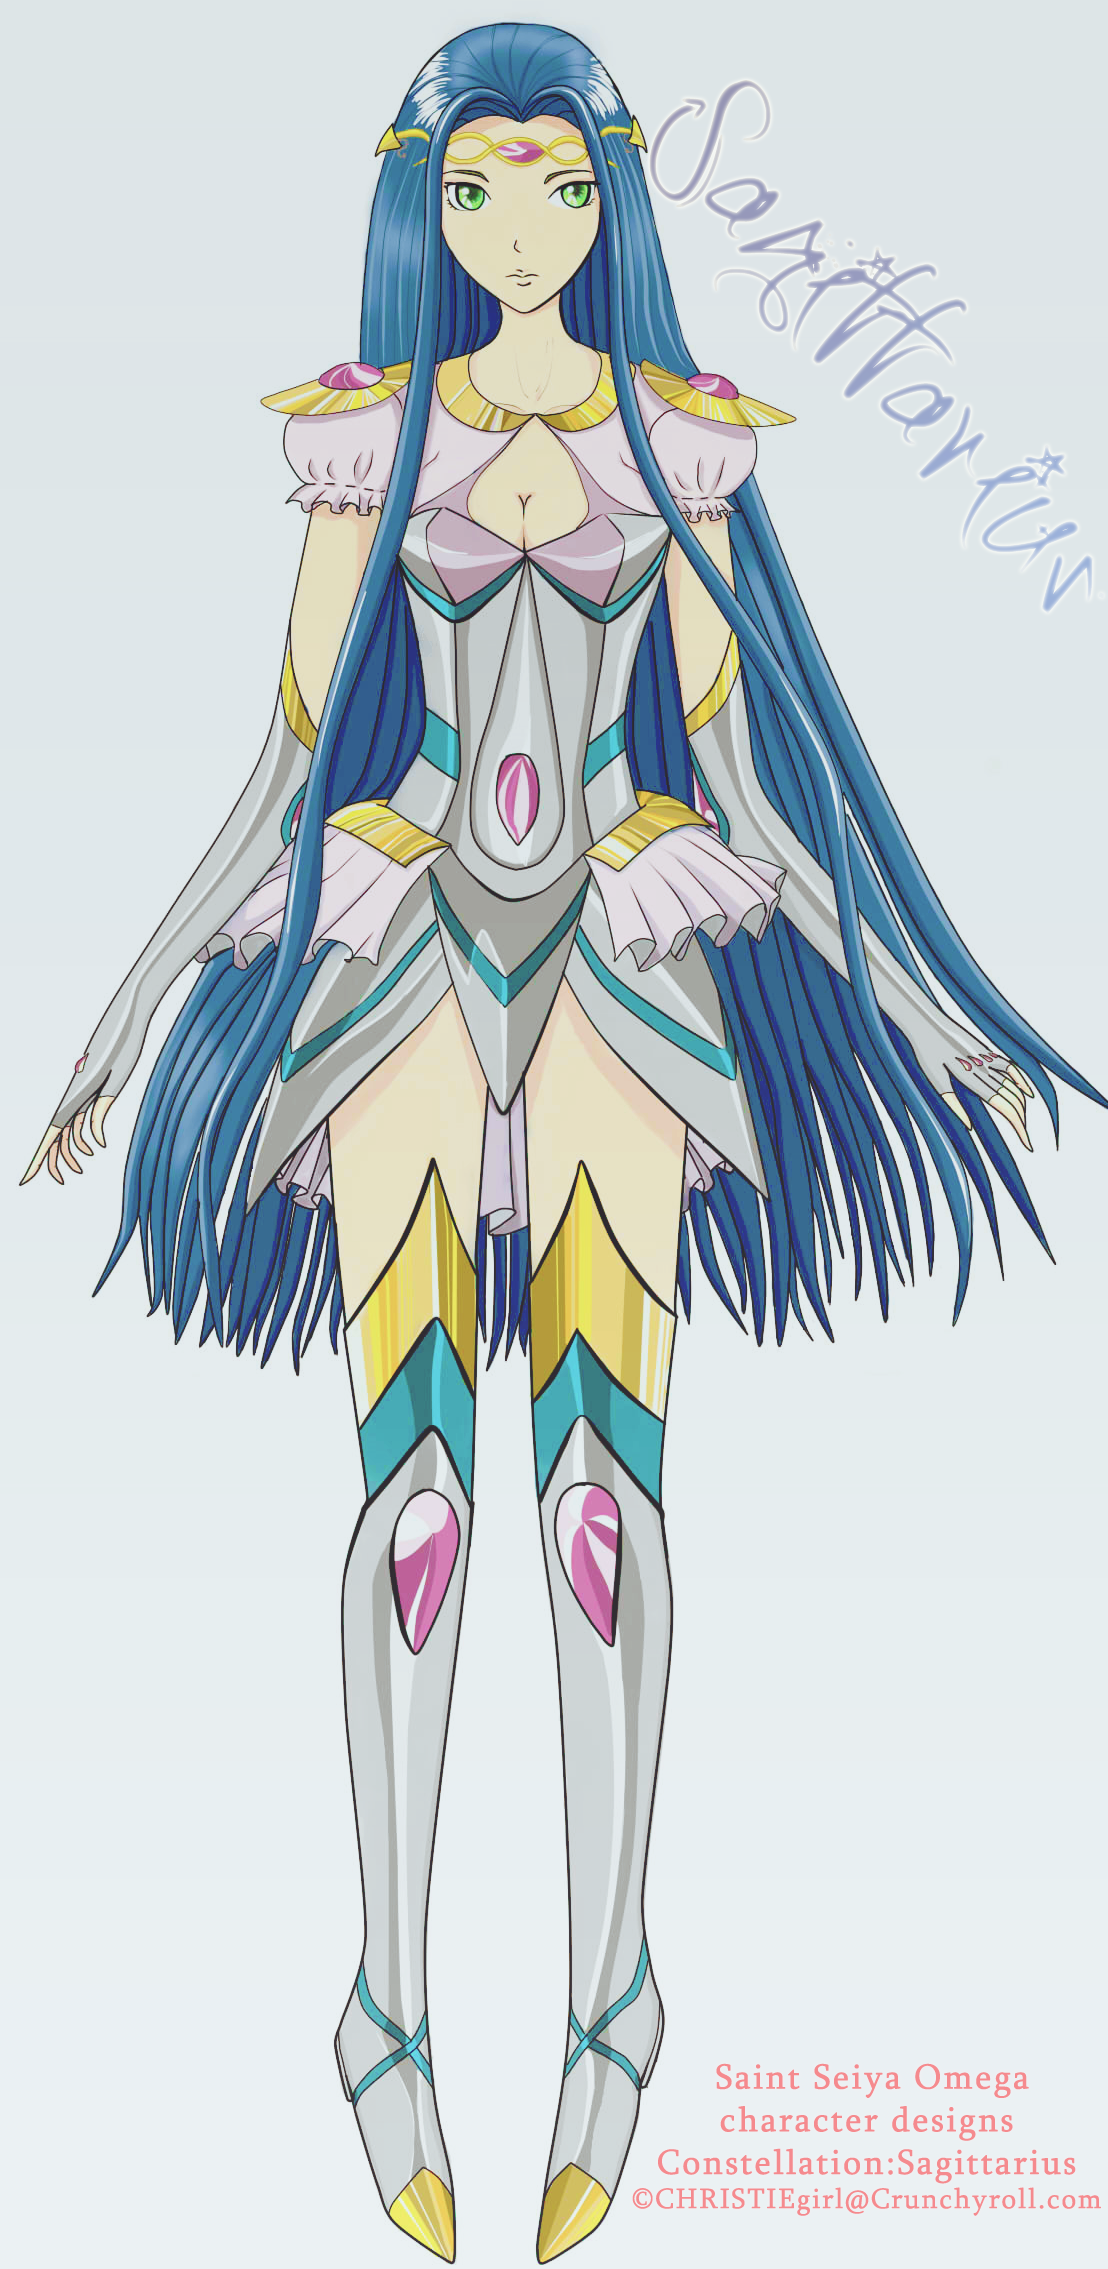 Saint Seiya Omega  Saint seiya, Anime, Illustration character design